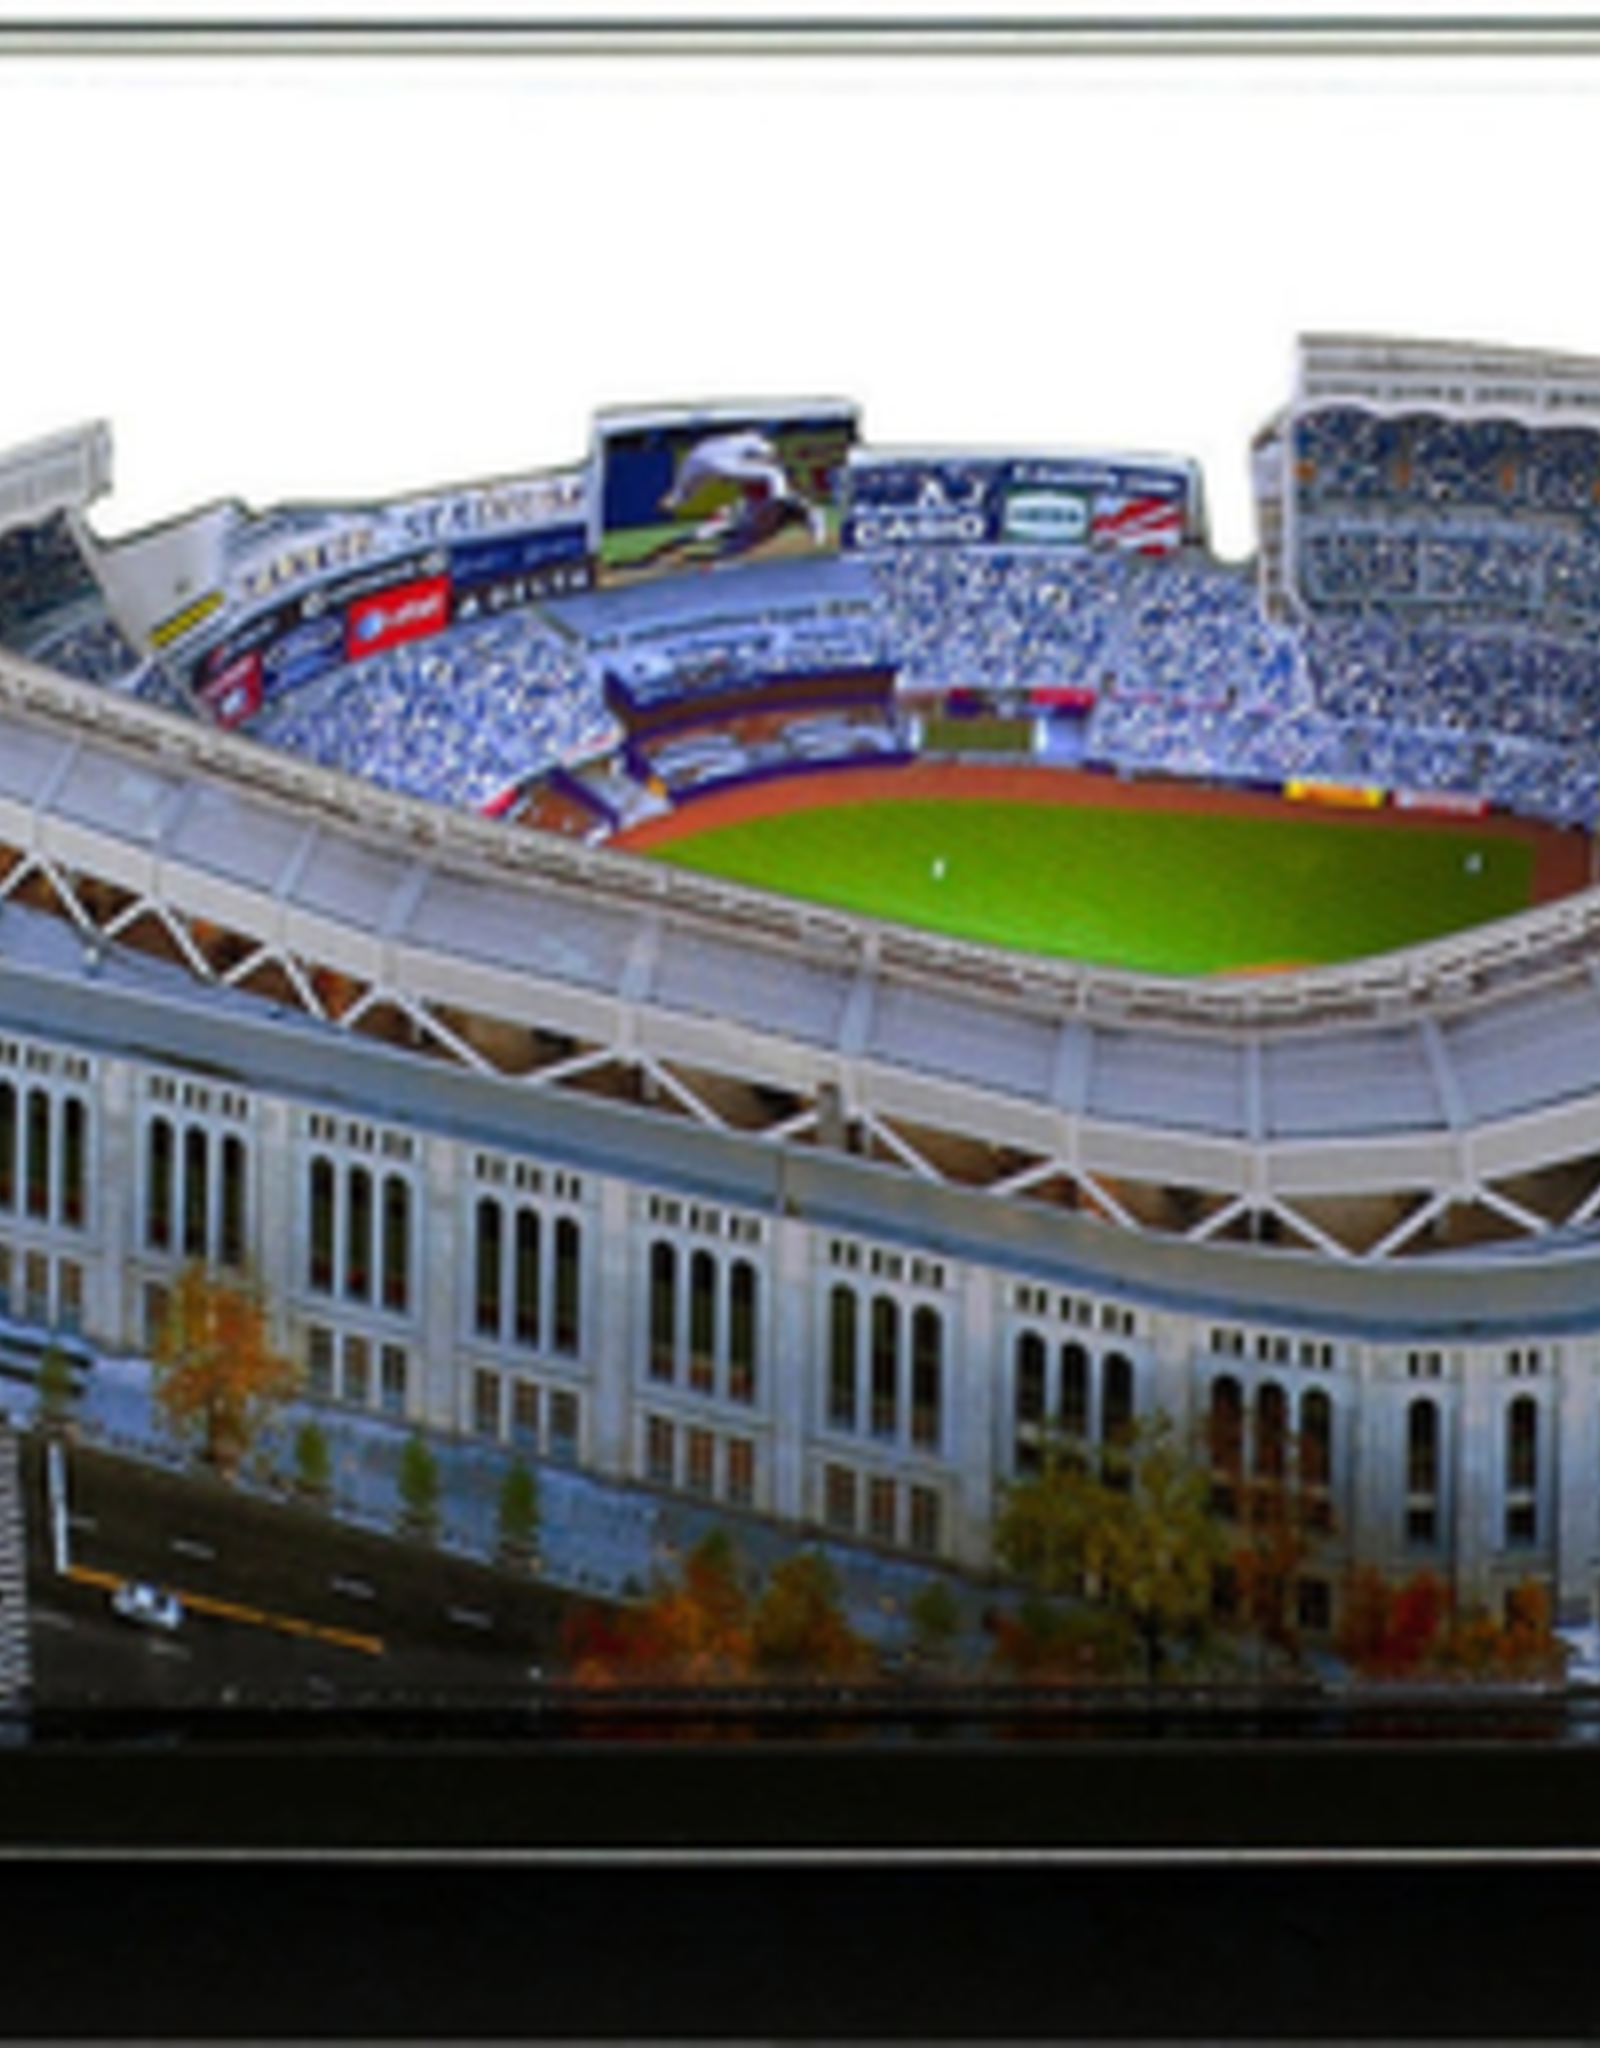 HOMEFIELDS Yankees HomeField - Yankee Stadium 19IN